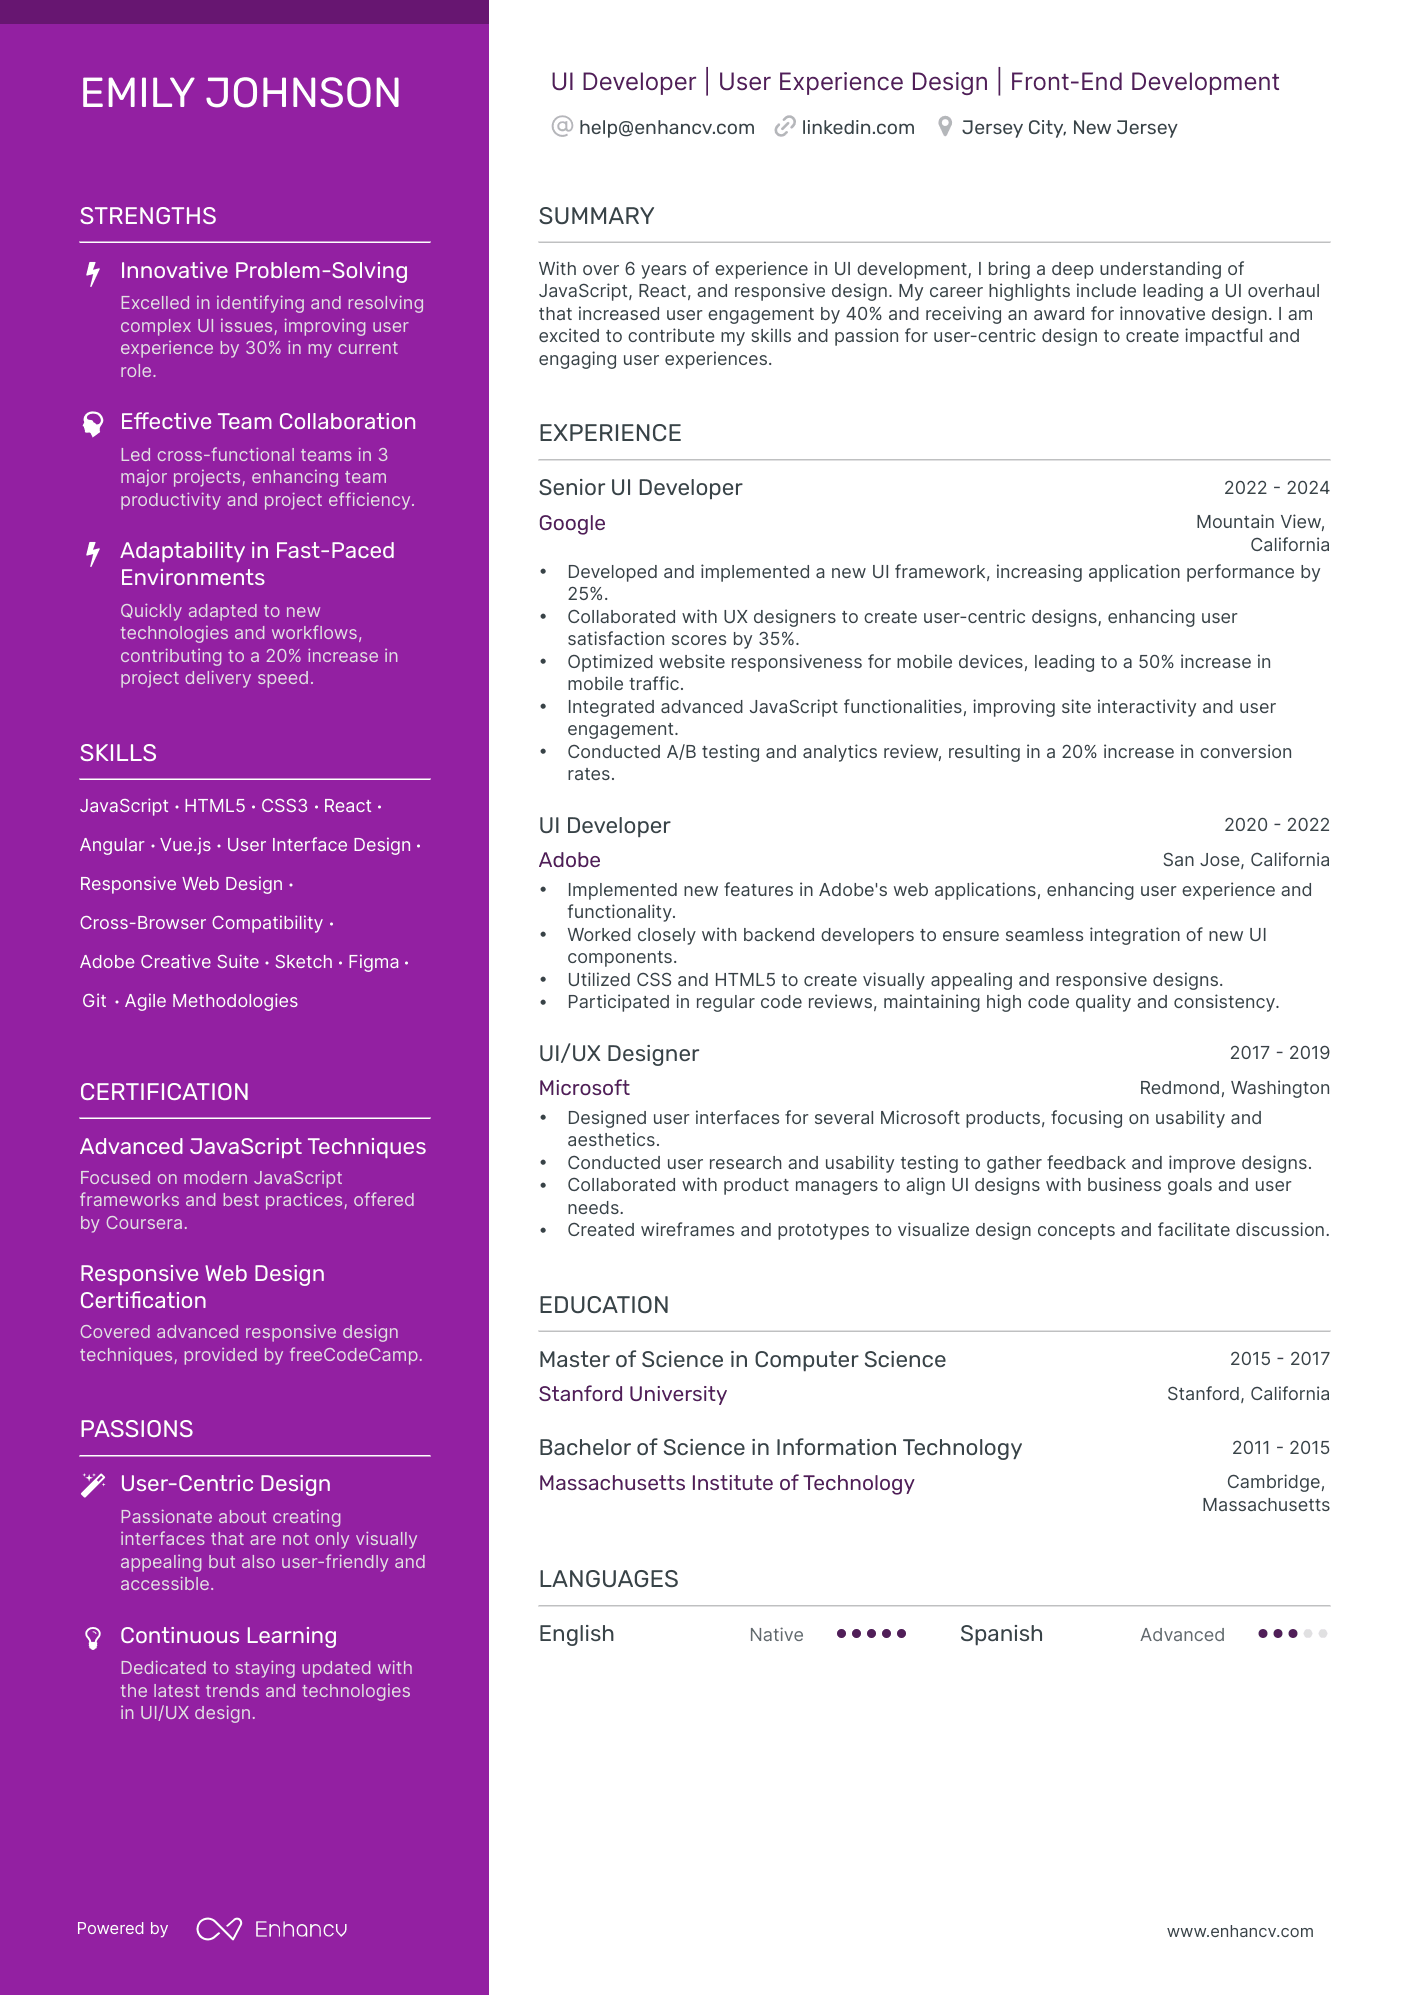 UI Developer resume example